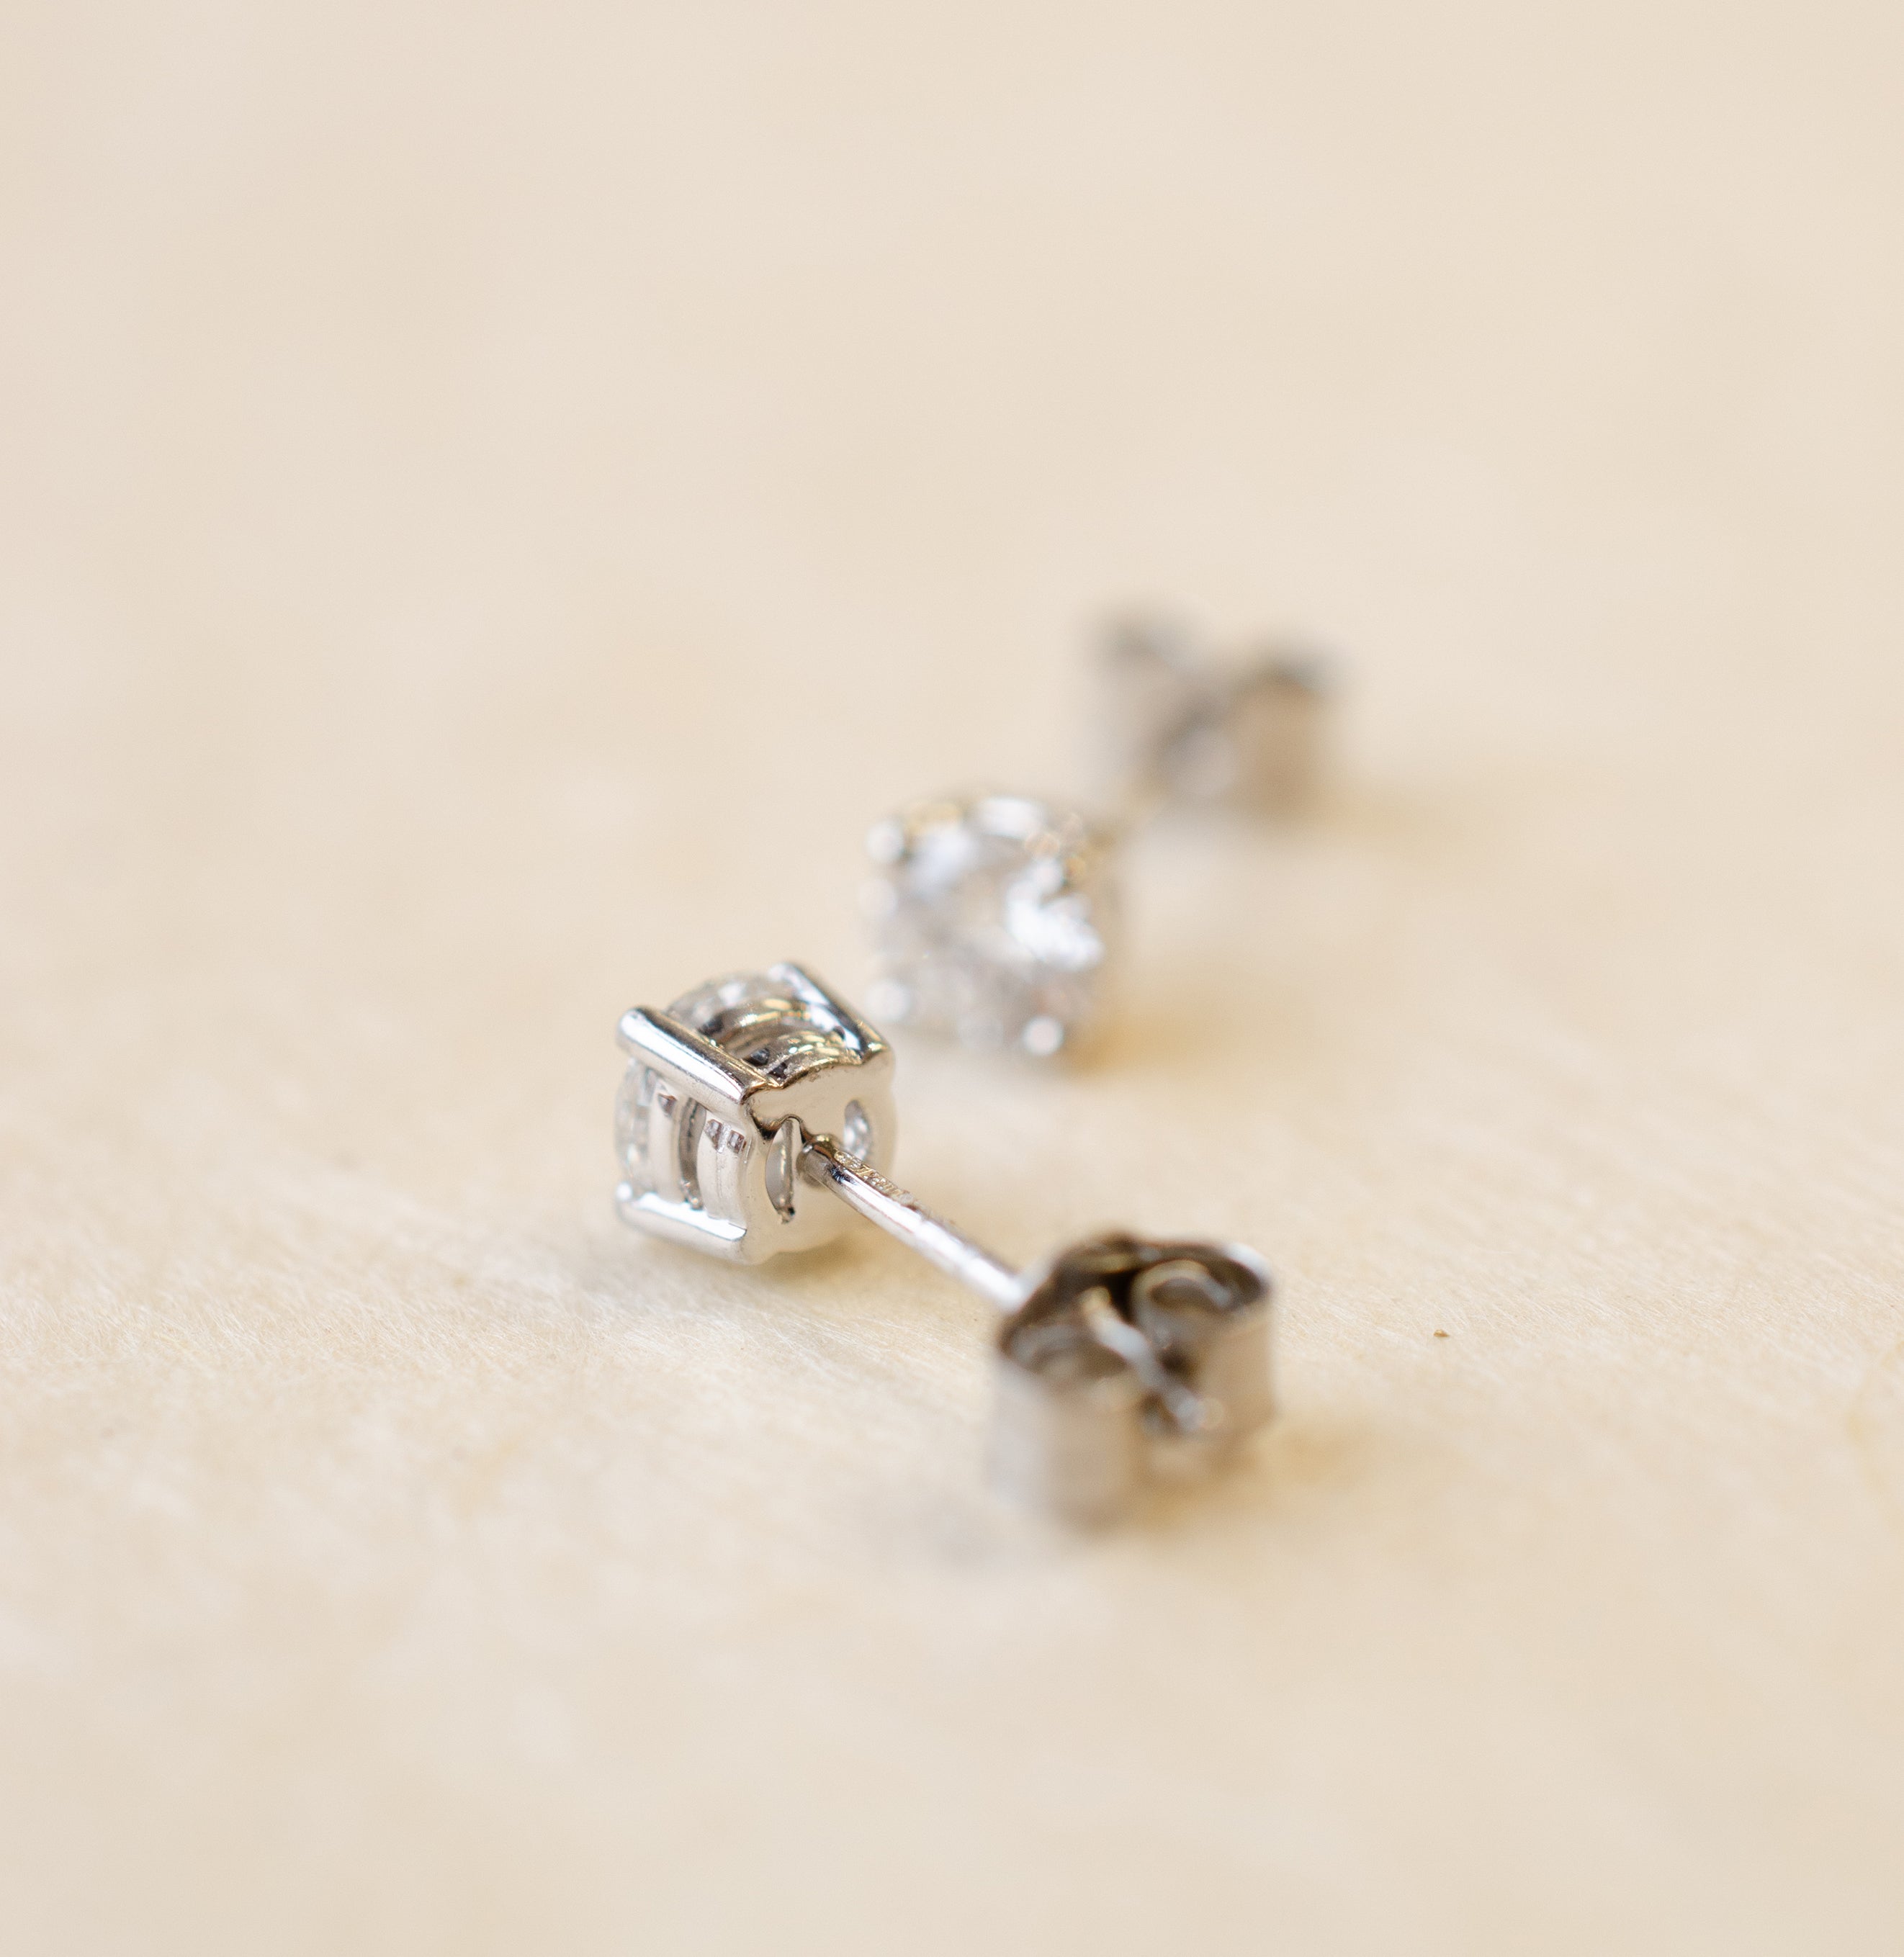 Four Claw Lab Grown Diamond Stud Earrings in Platinum